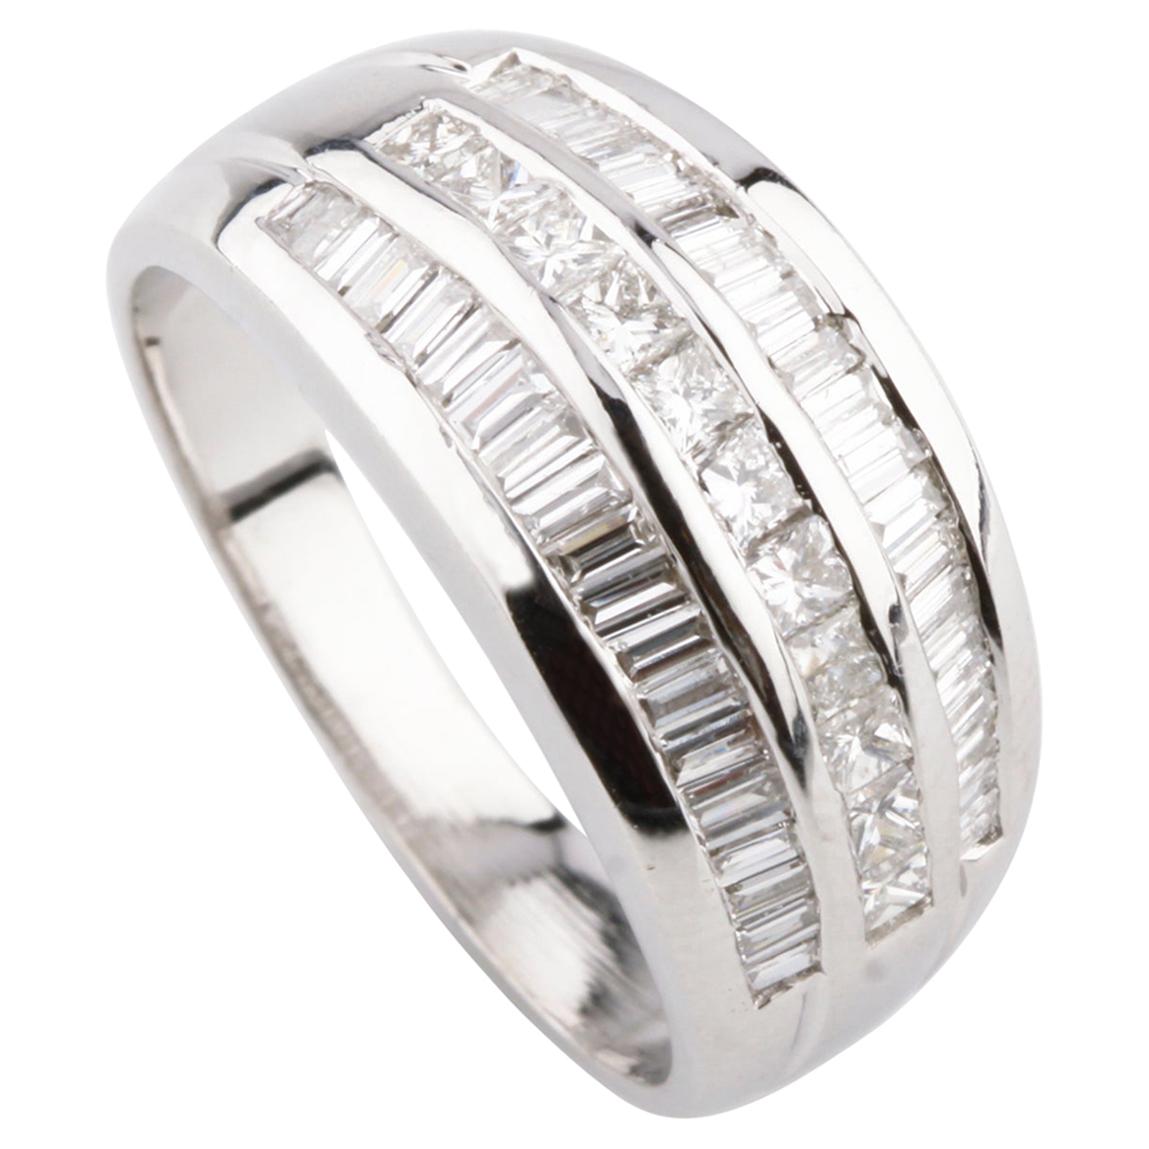 1.36 Carat Diamond Three-Row Band Ring in White Gold